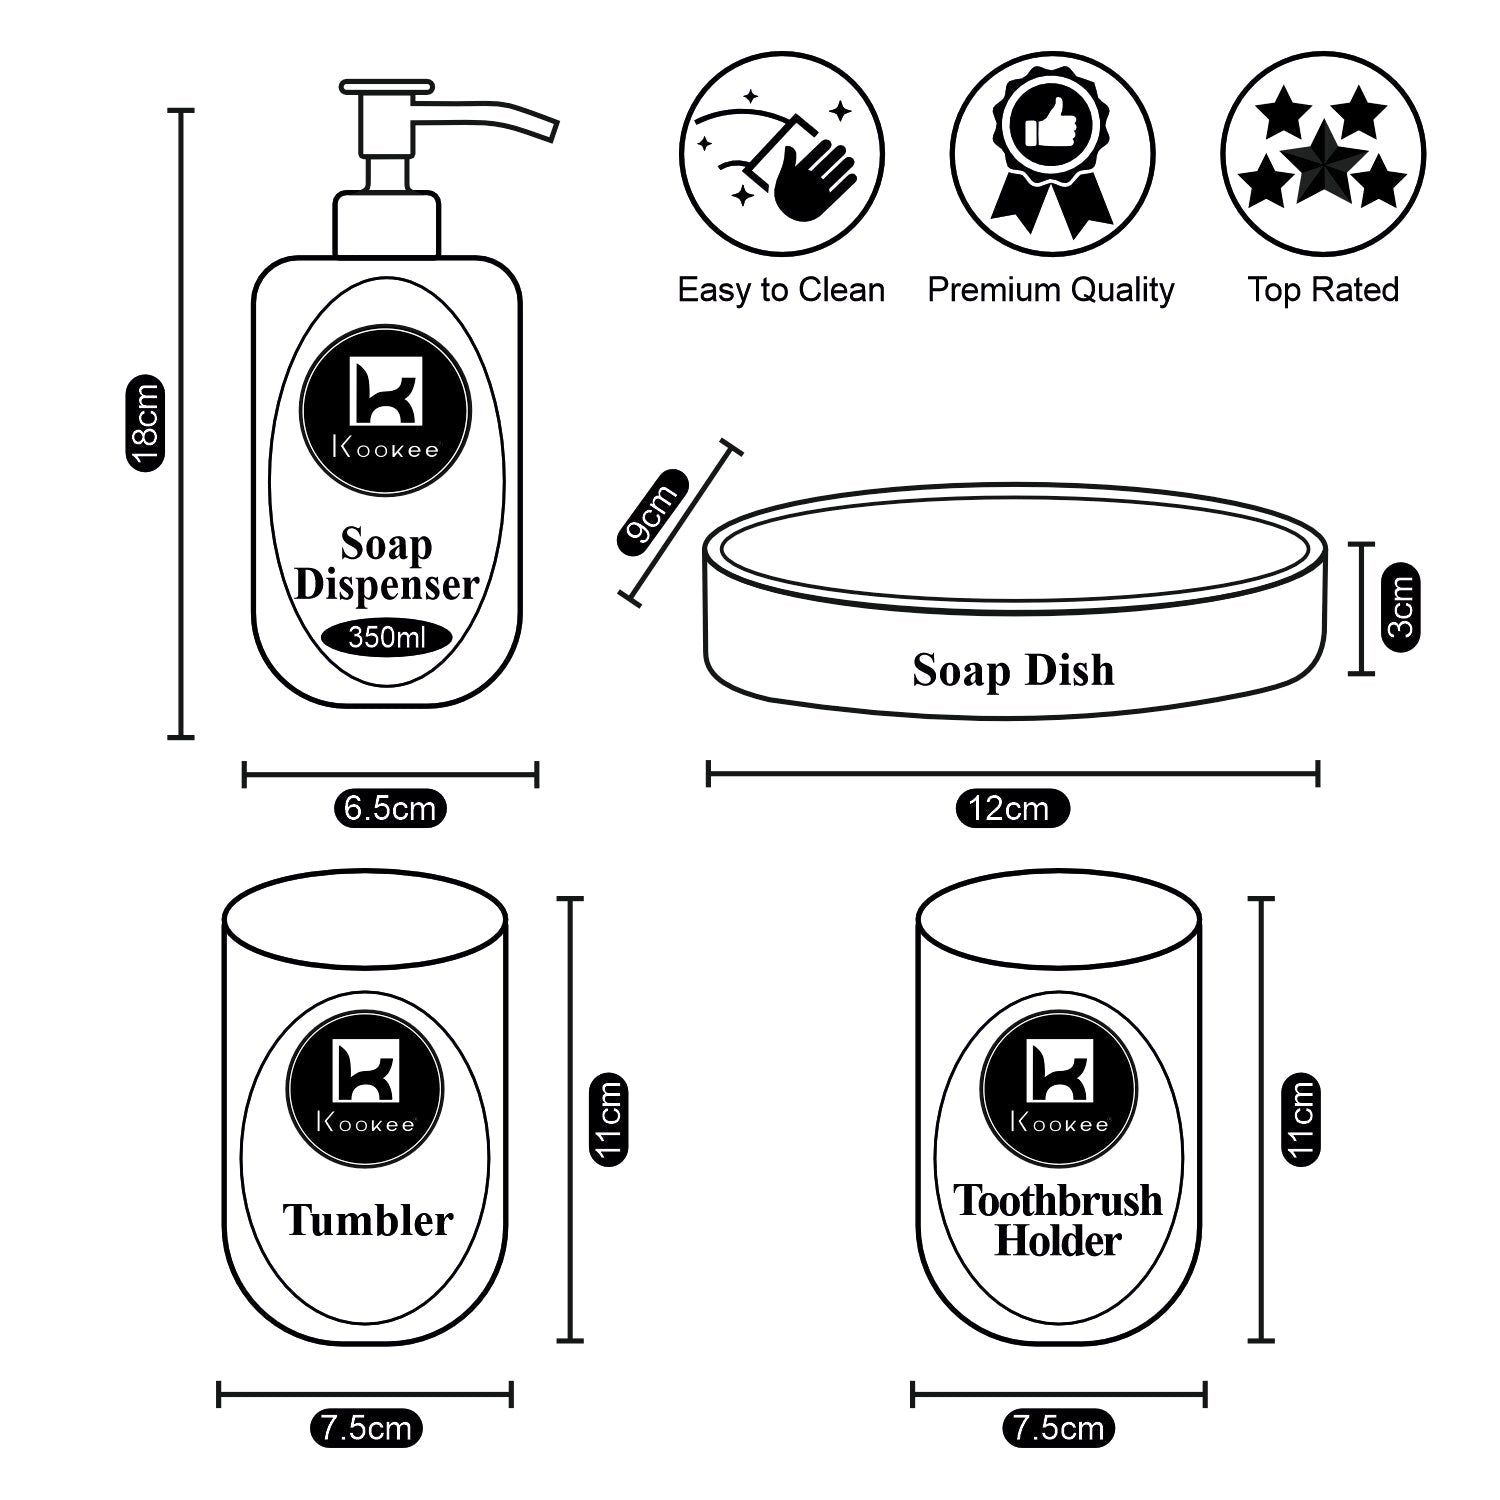 Ceramic Bathroom Accessories Set of 4 Bath Set with Soap Dispenser (7654)